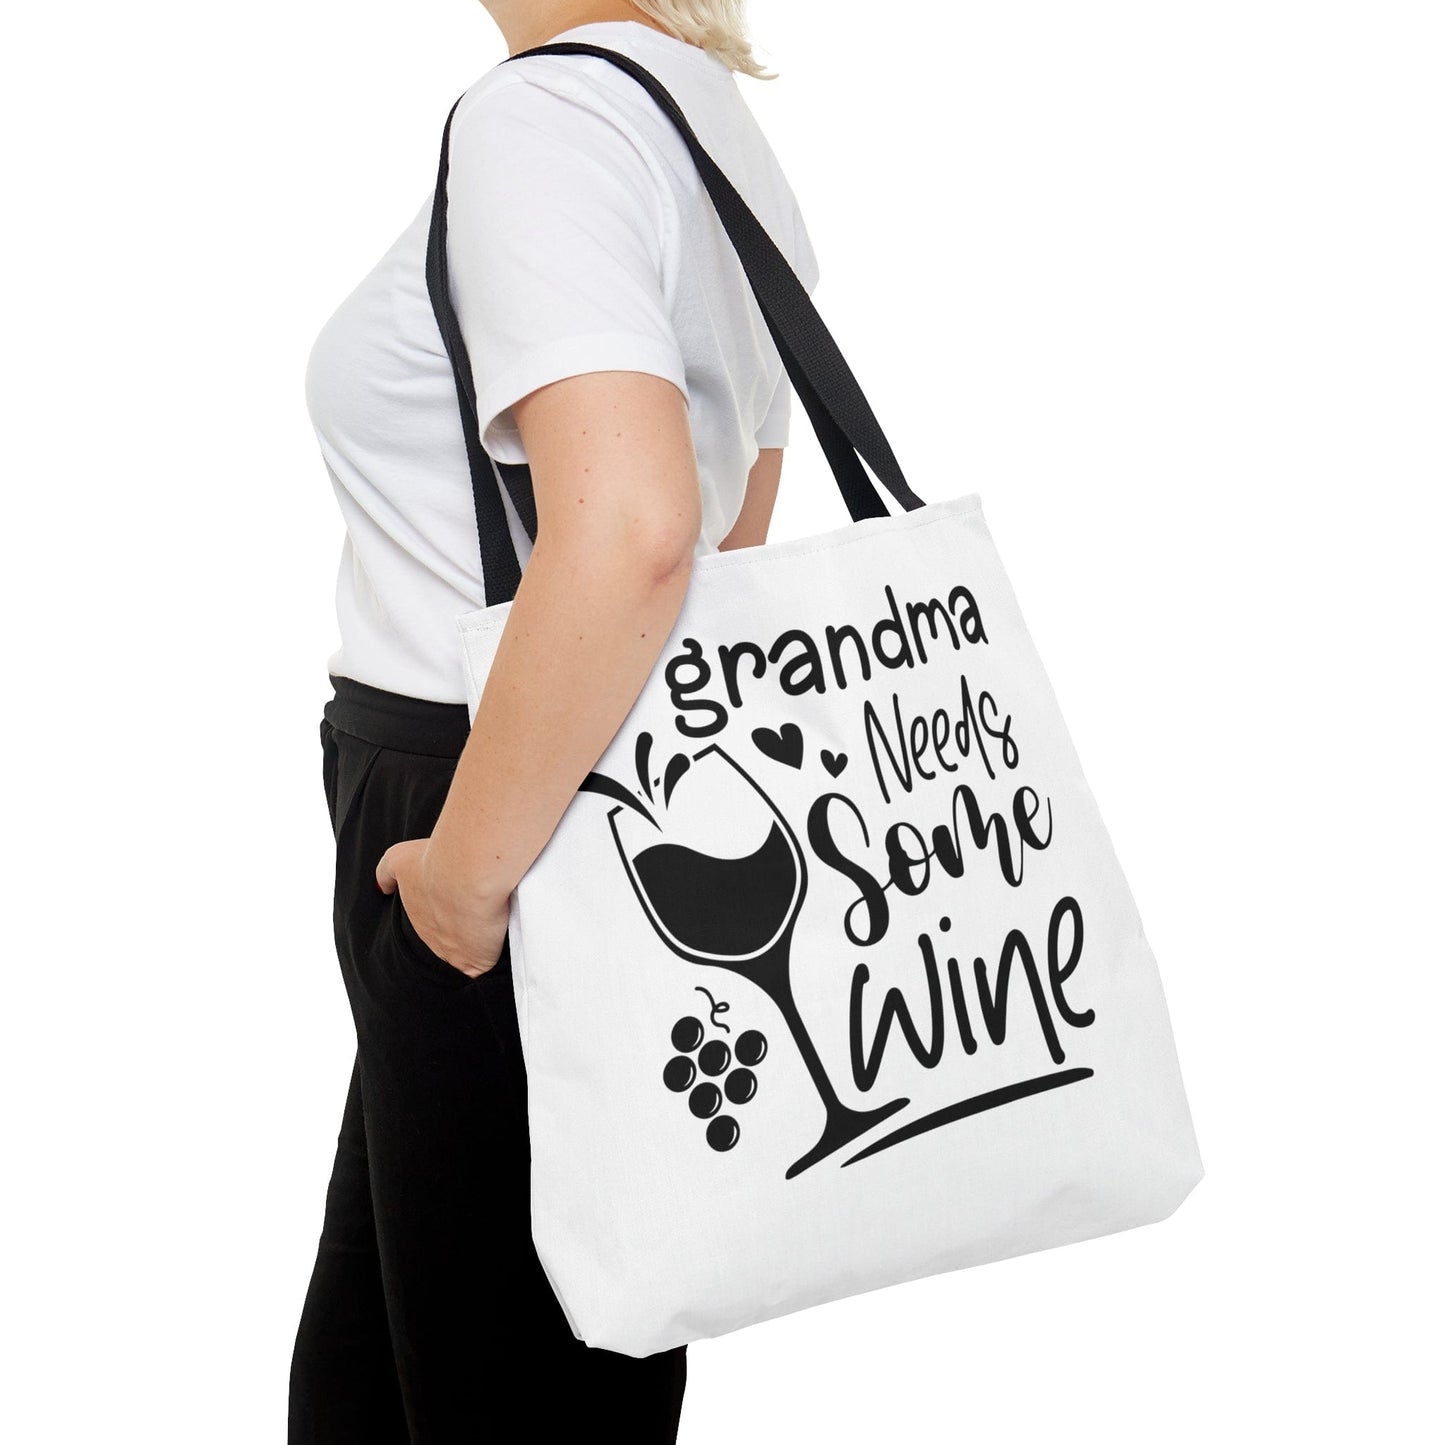 Grandma Needs Some Wine Tote Bag